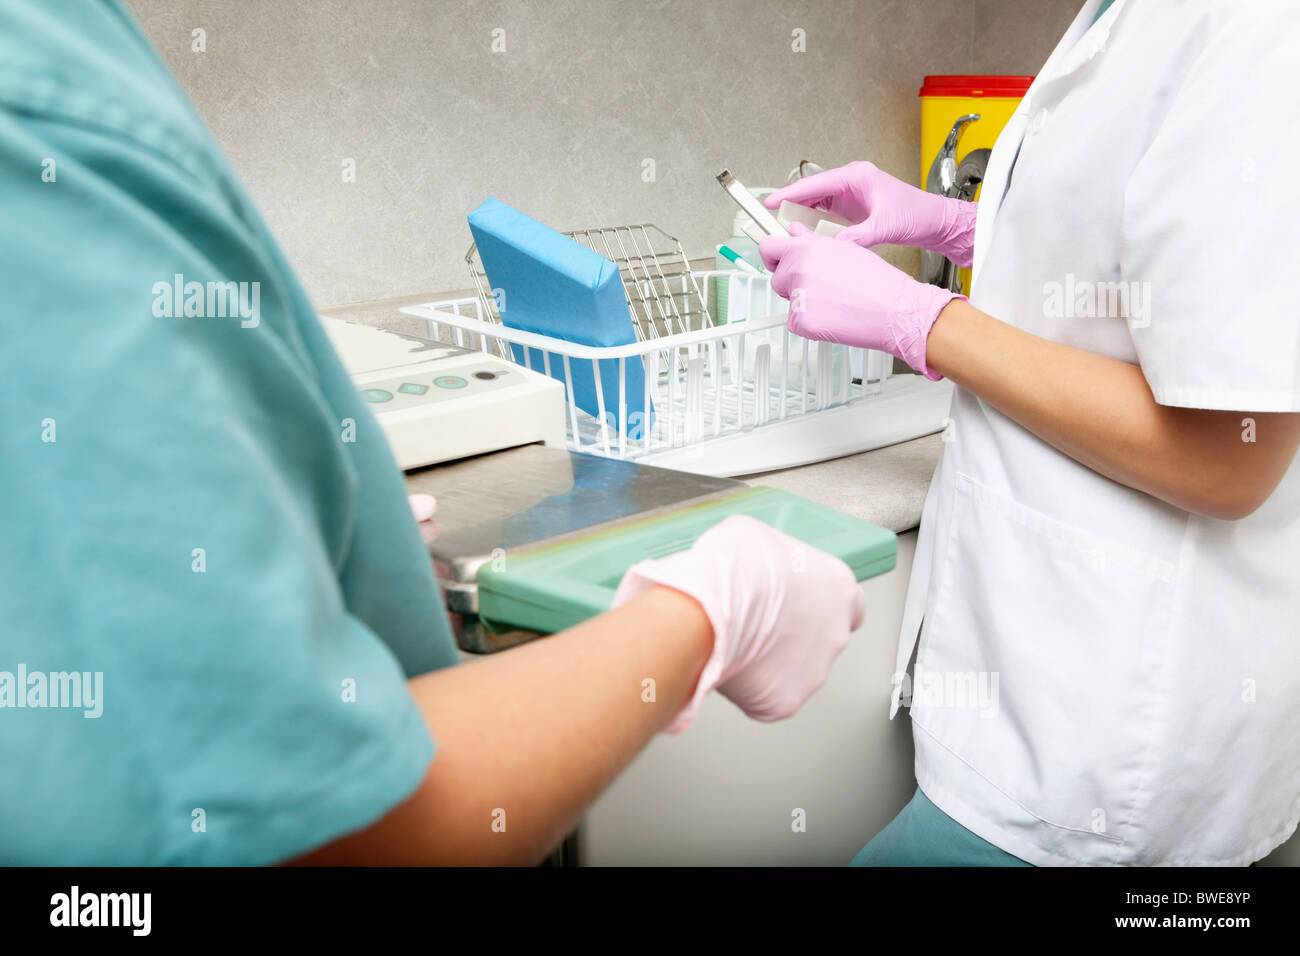 A medical professional sterilizing equipment Stock Photo